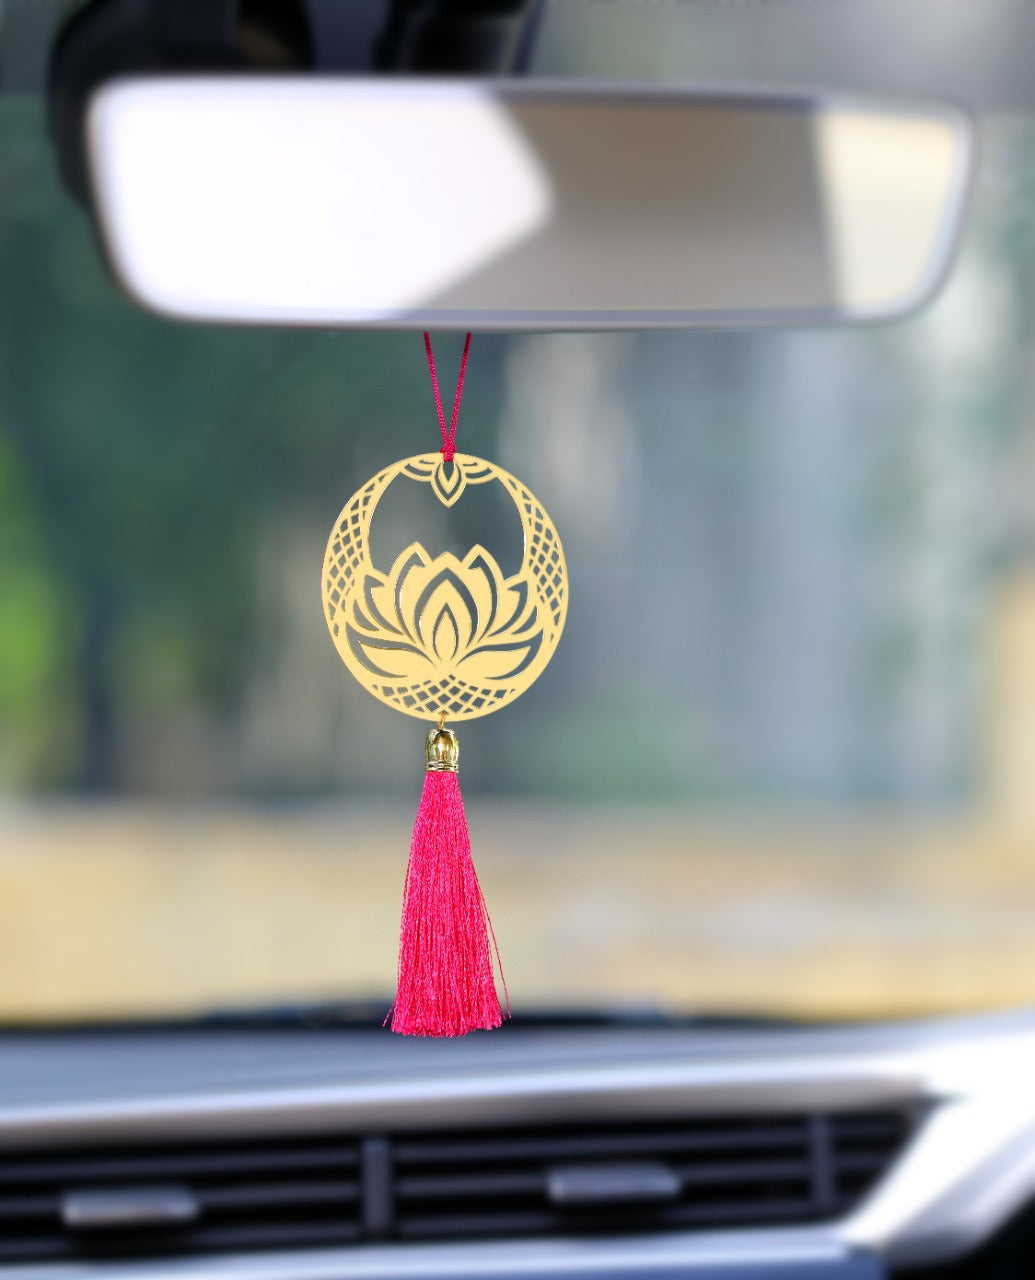 Lotus car rear view mirror hanging décor in brass metal